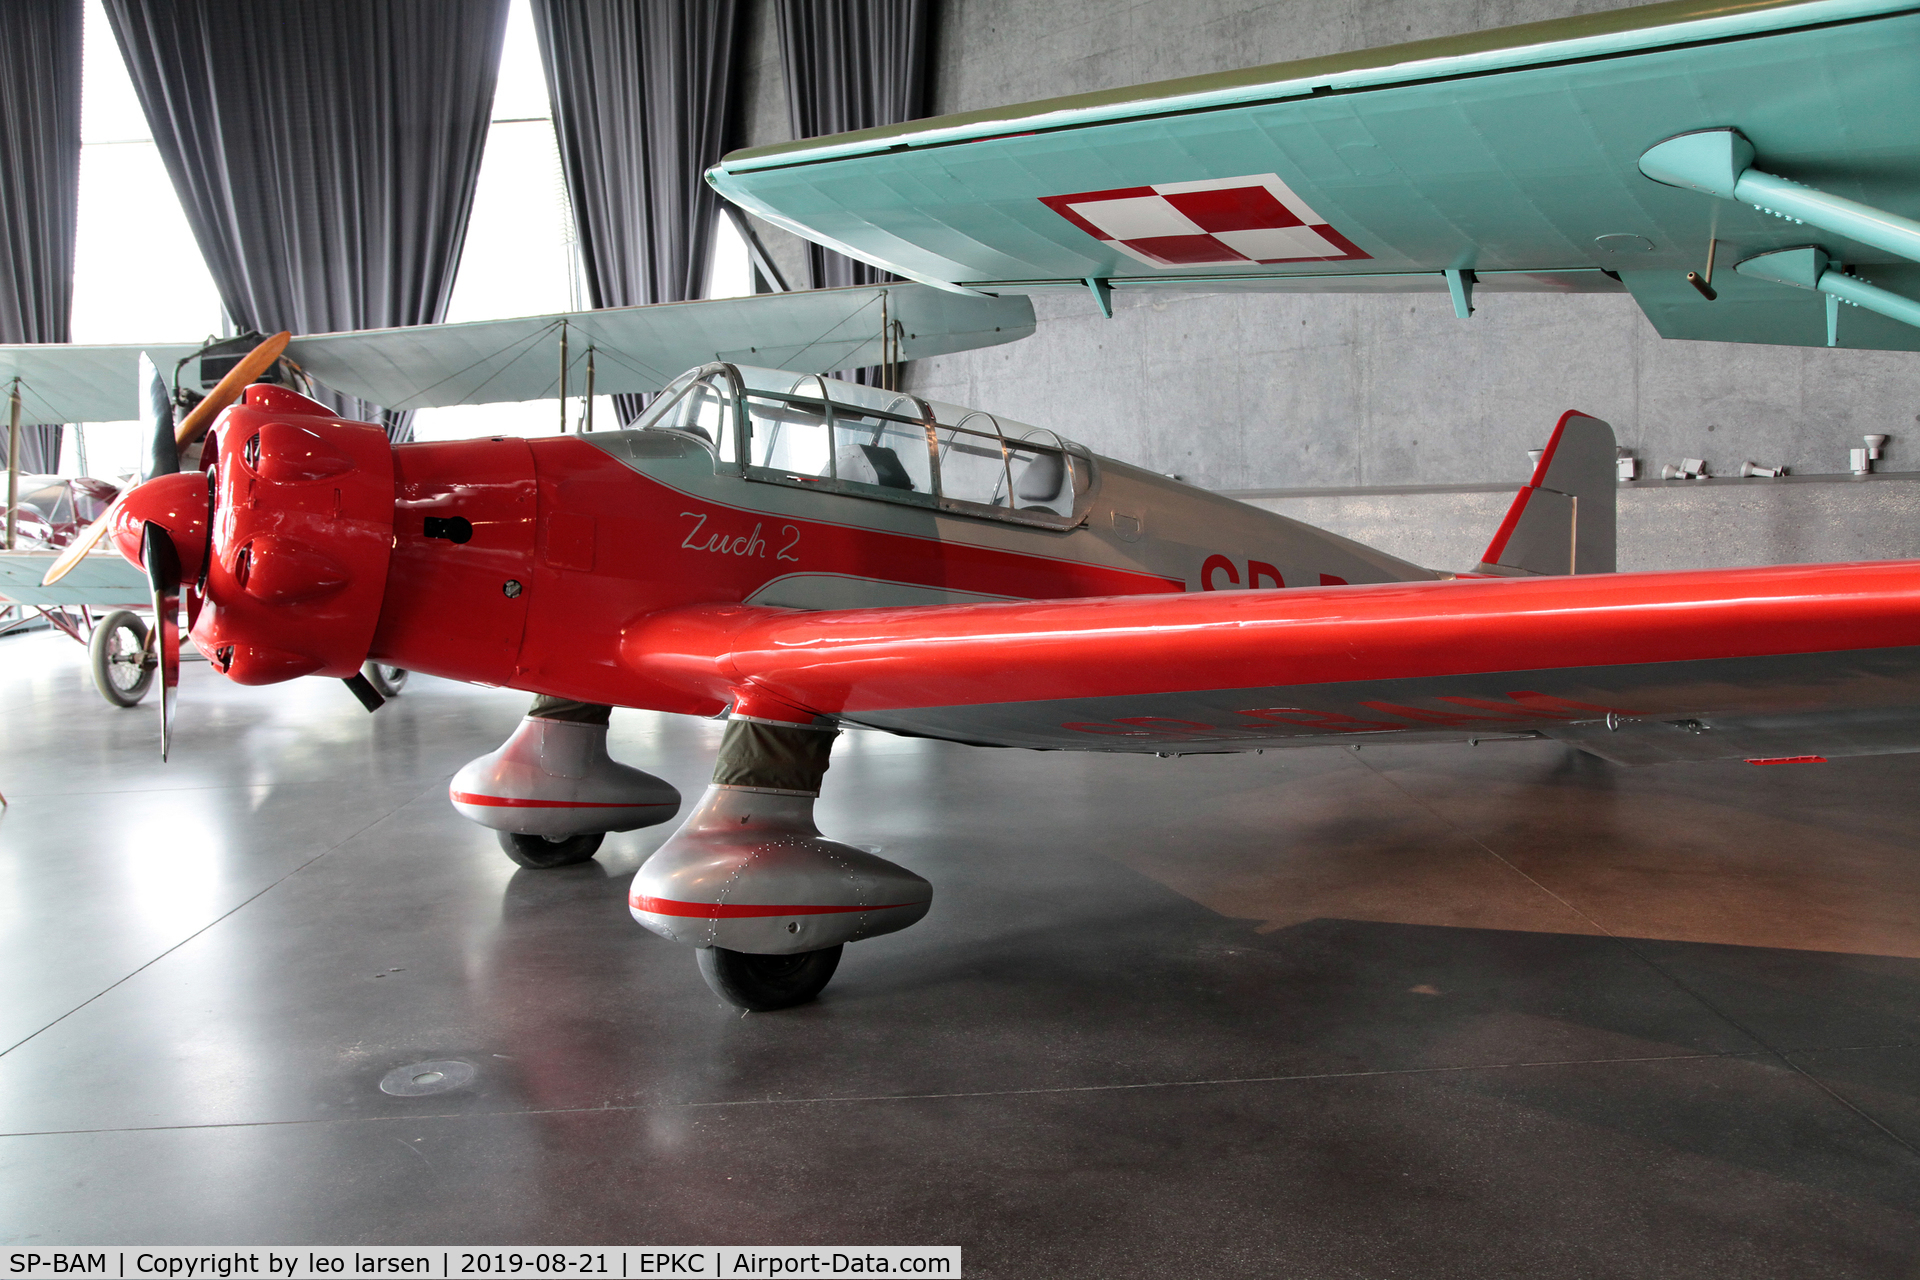 SP-BAM, 1950 LWD Zuch-2 C/N 02, Polish Aviation Museum Krakow 21.8.2019